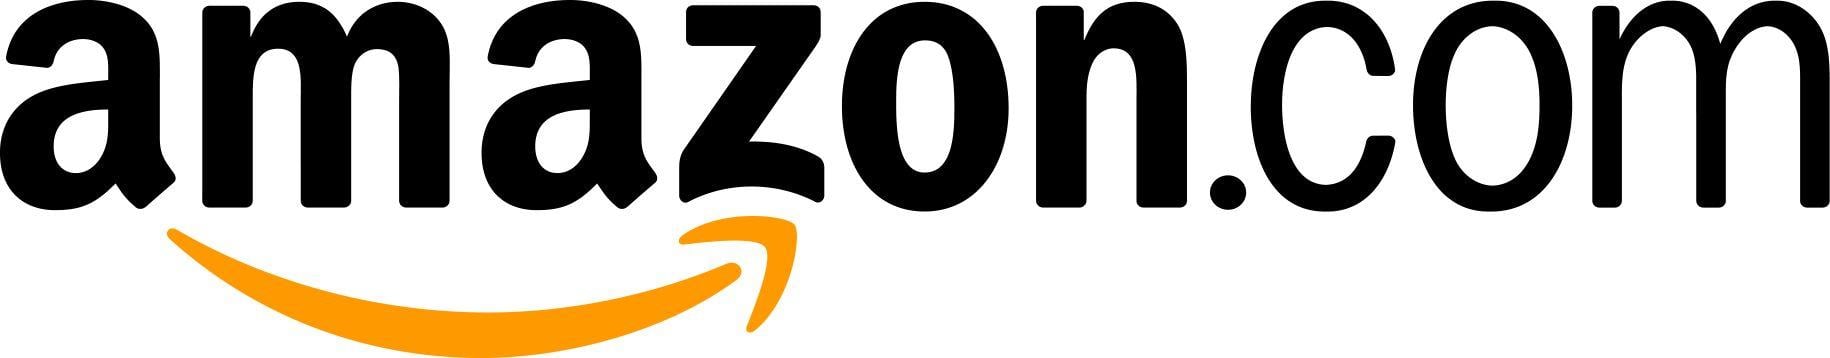 New Amazon Prime Logo - Images